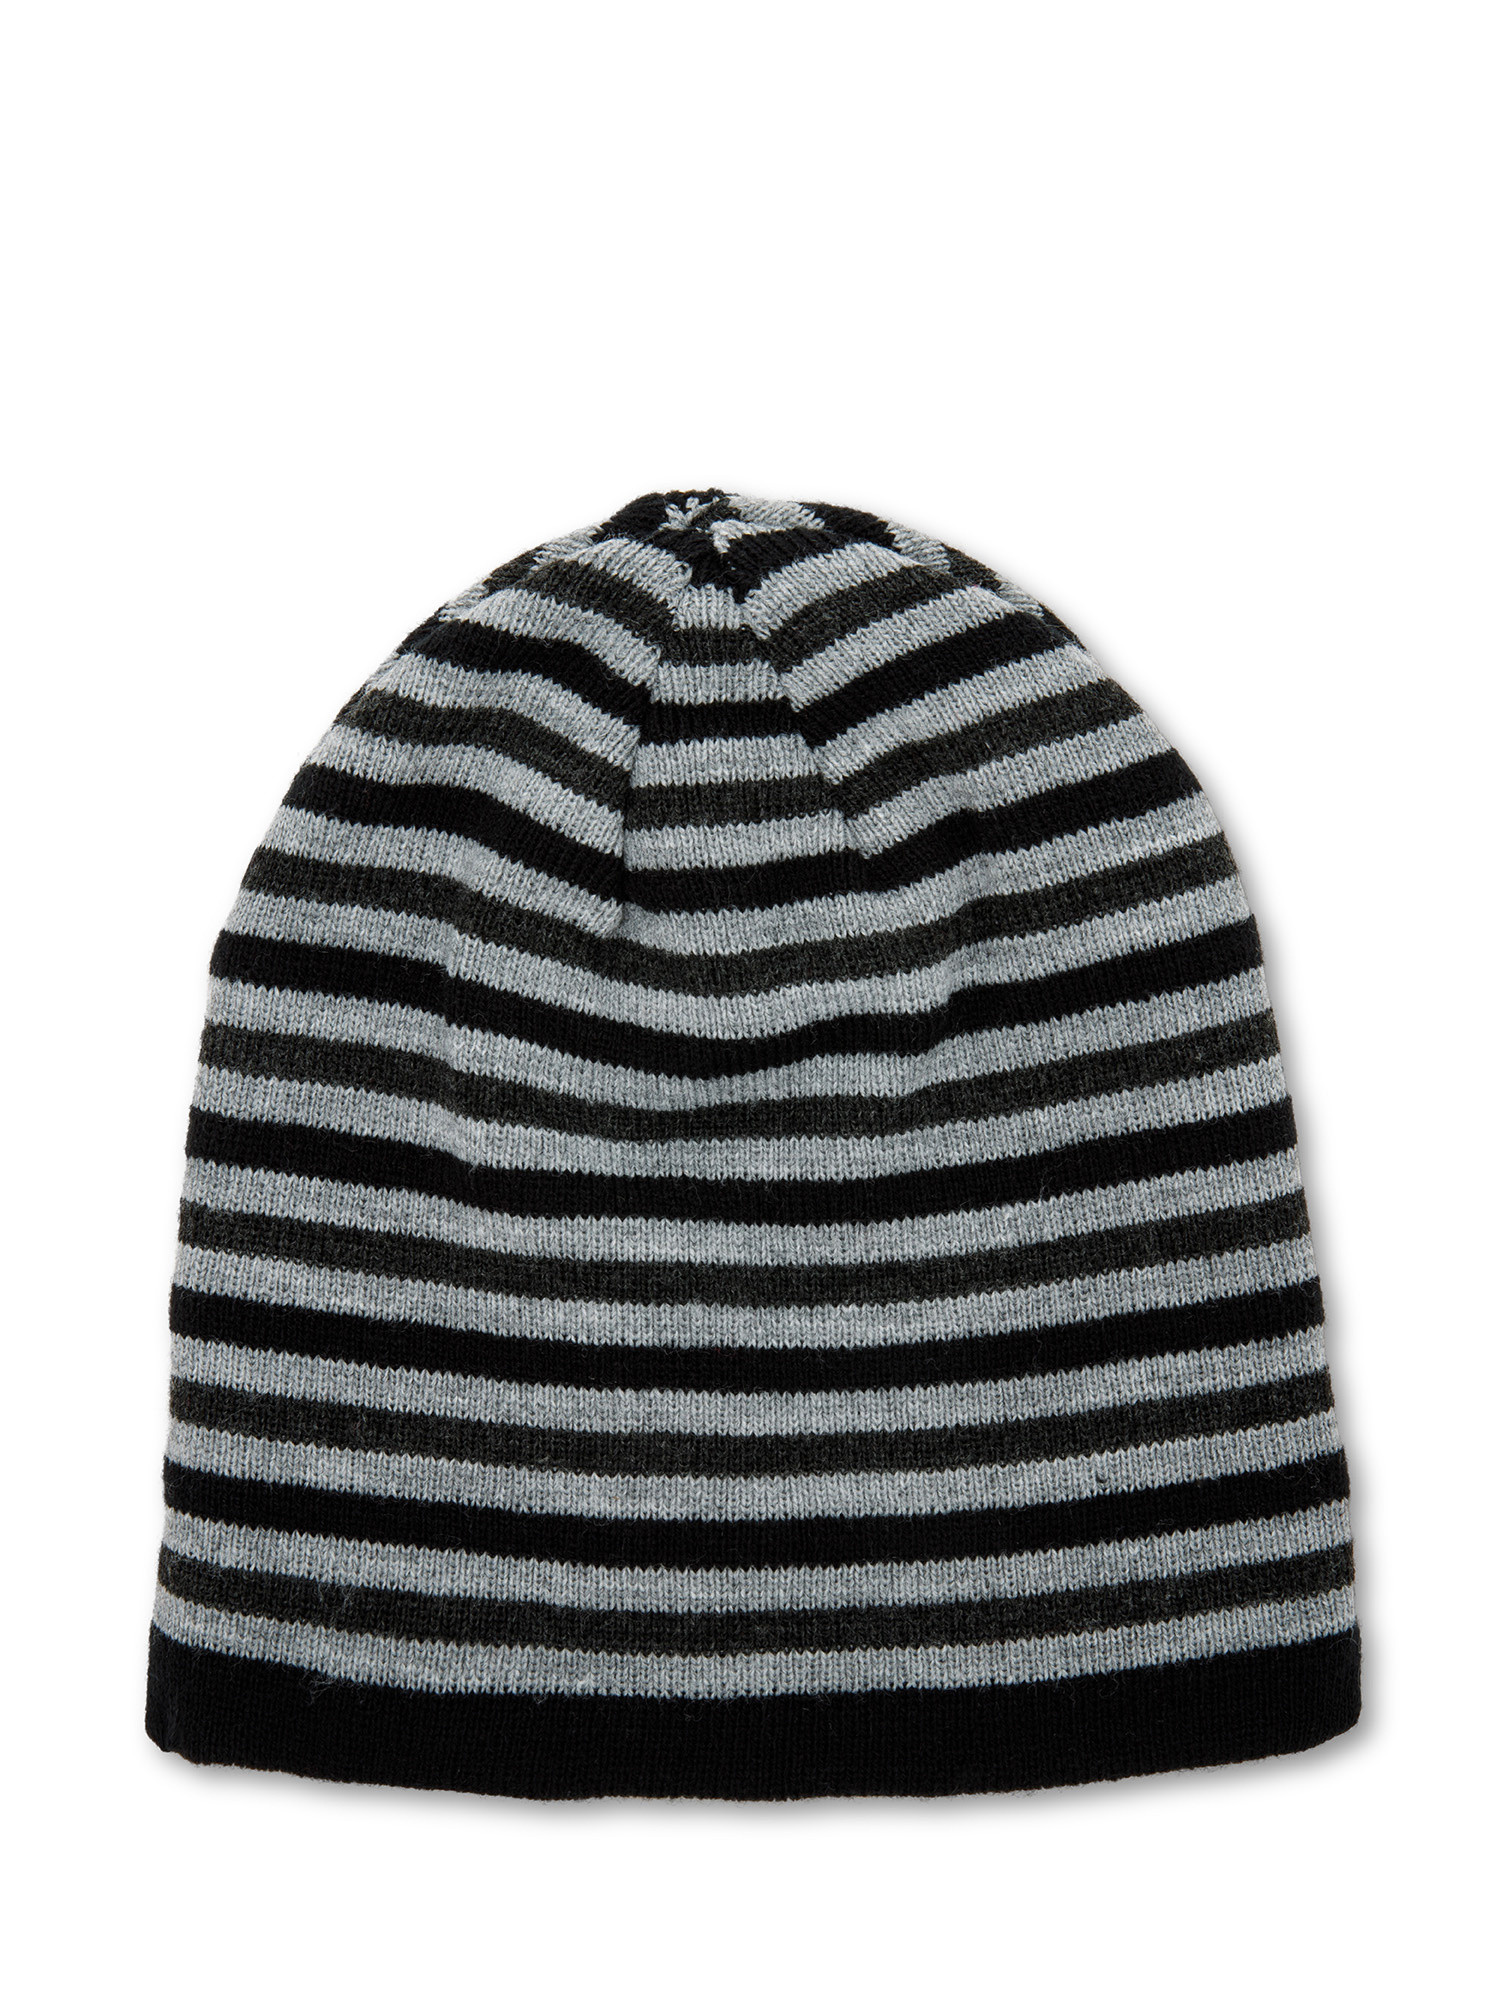 Luca D'Altieri - Striped knit hat, Grey, large image number 0